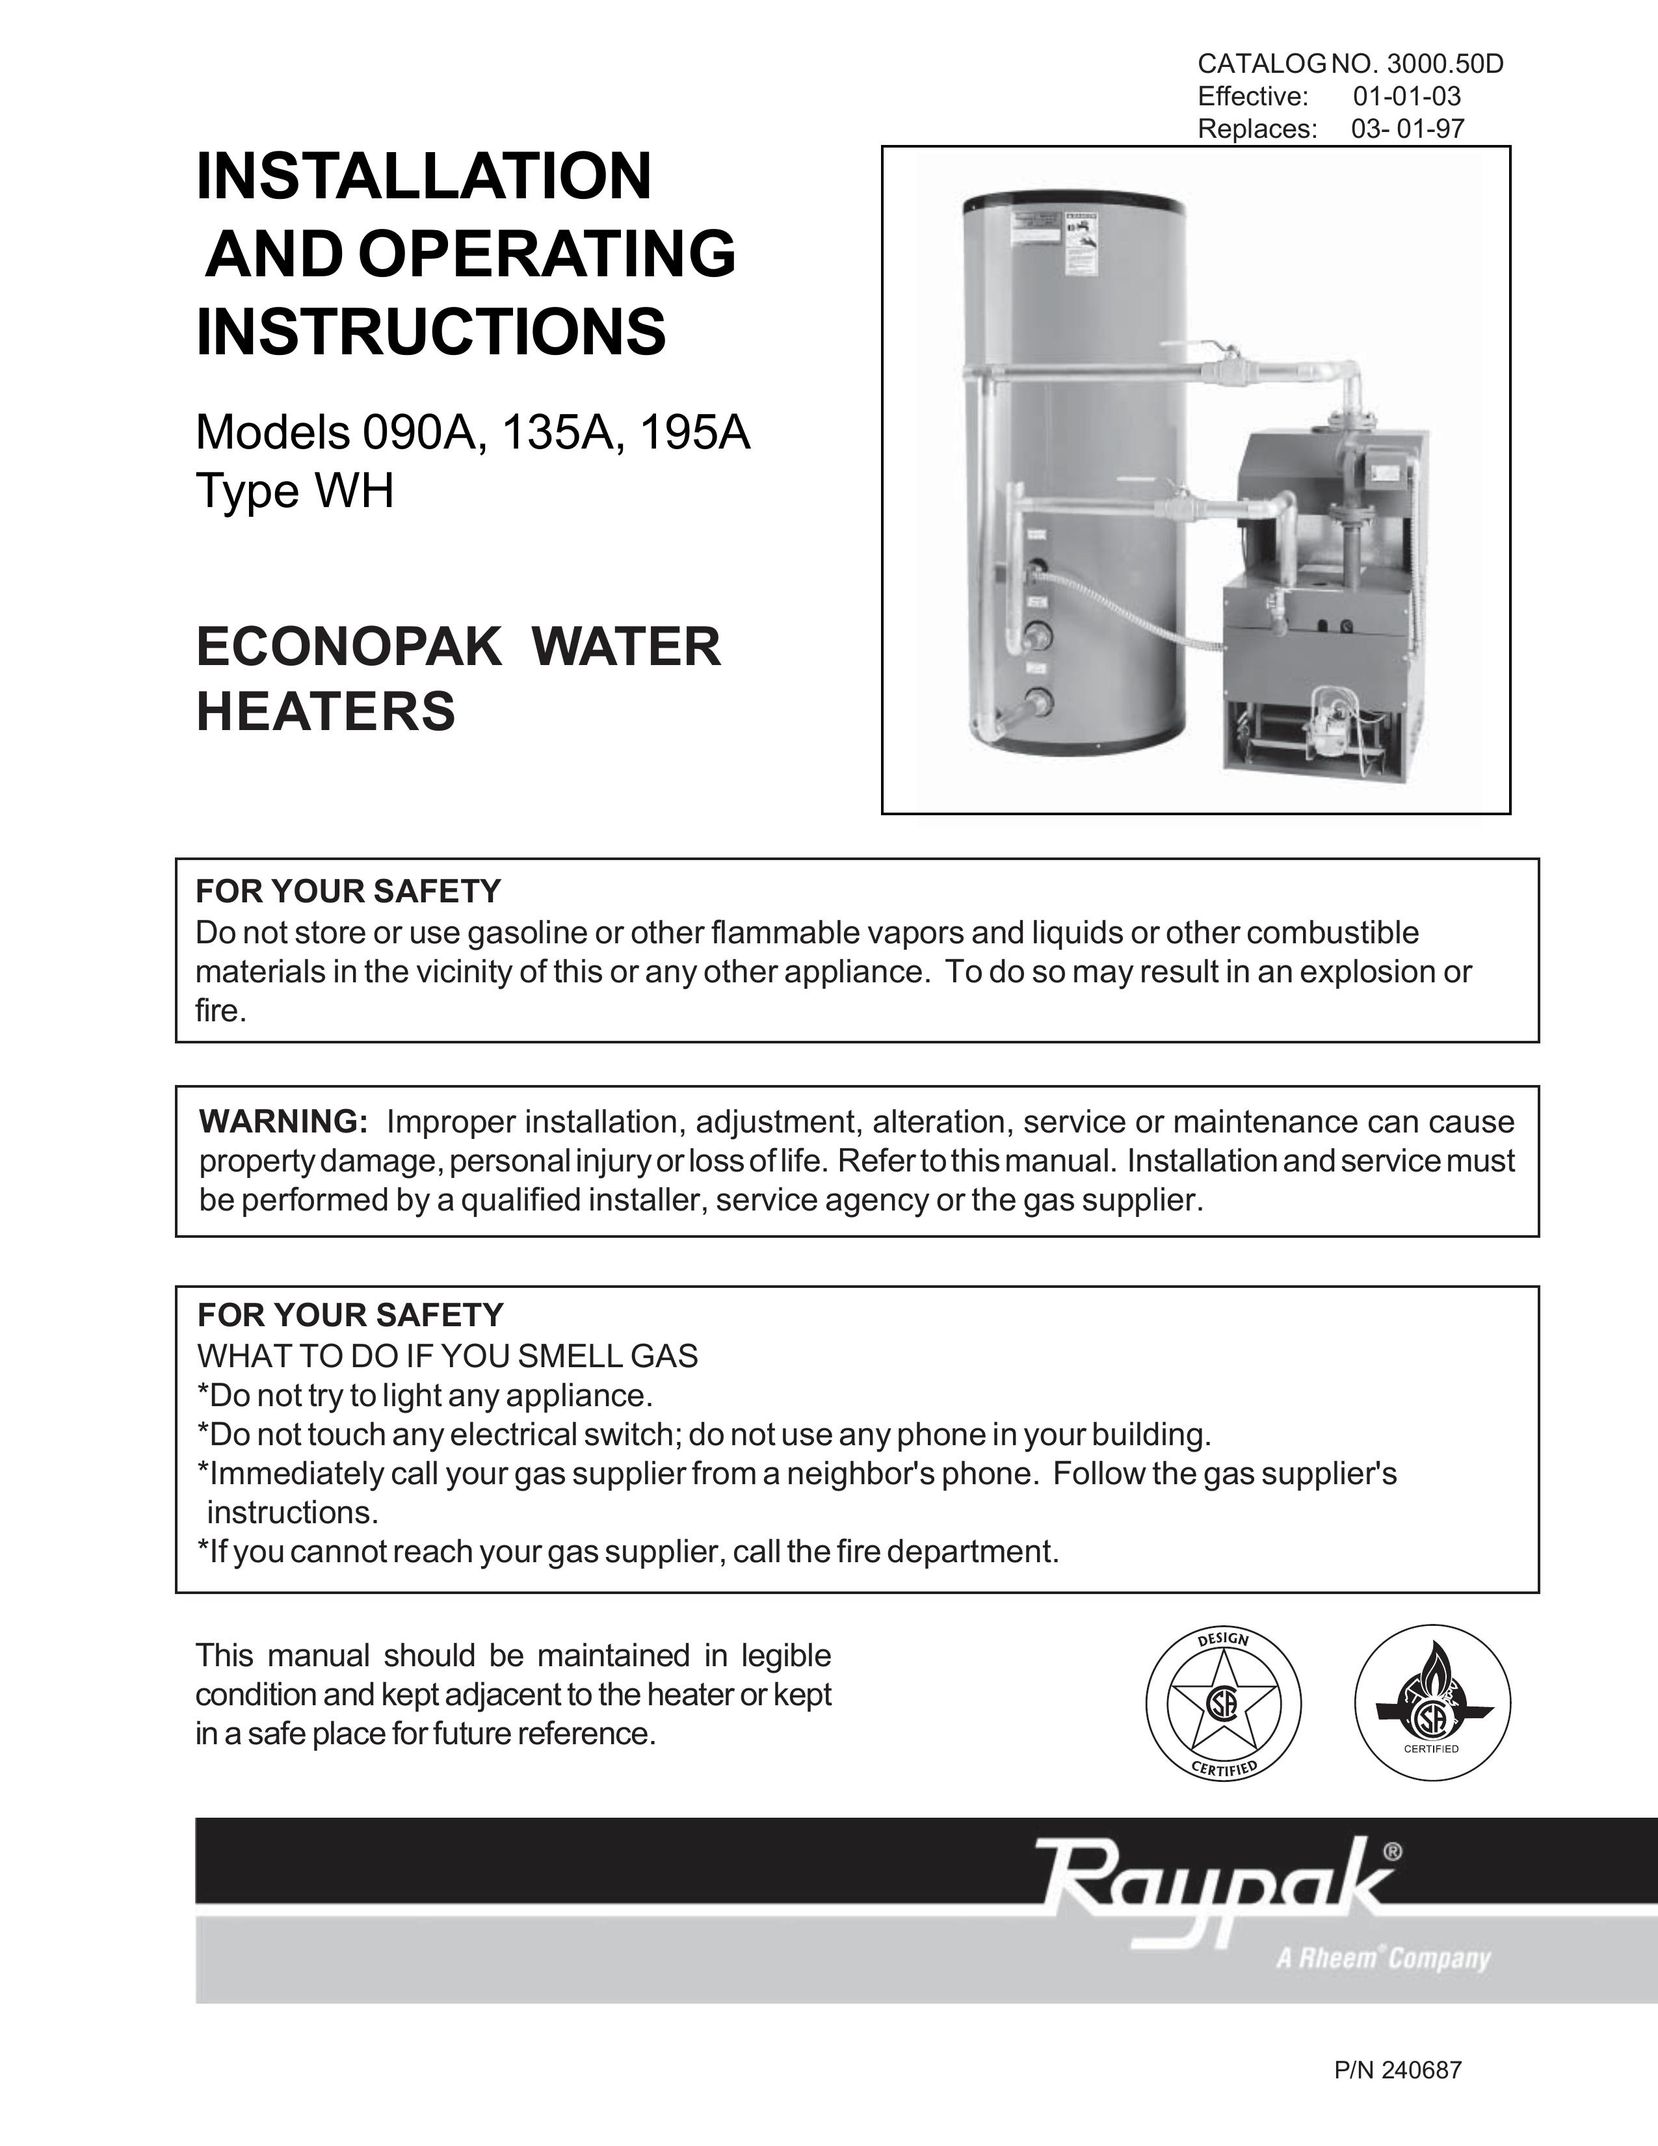 Raypak 135A Water Heater User Manual